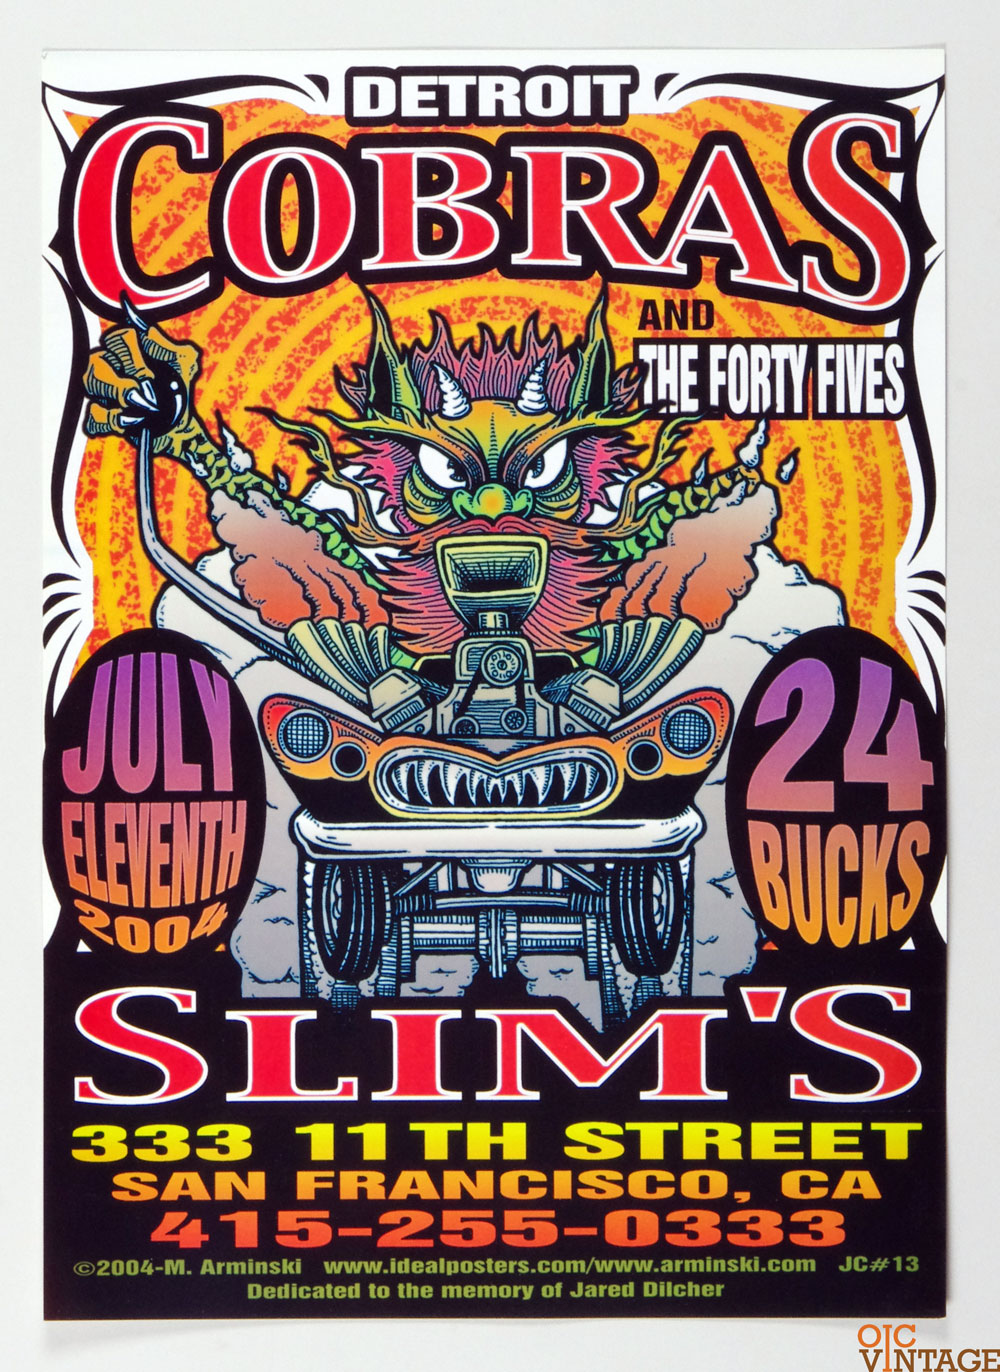 Detroit Cobras Poster 2004 Jul 11 Slim's San Francisco